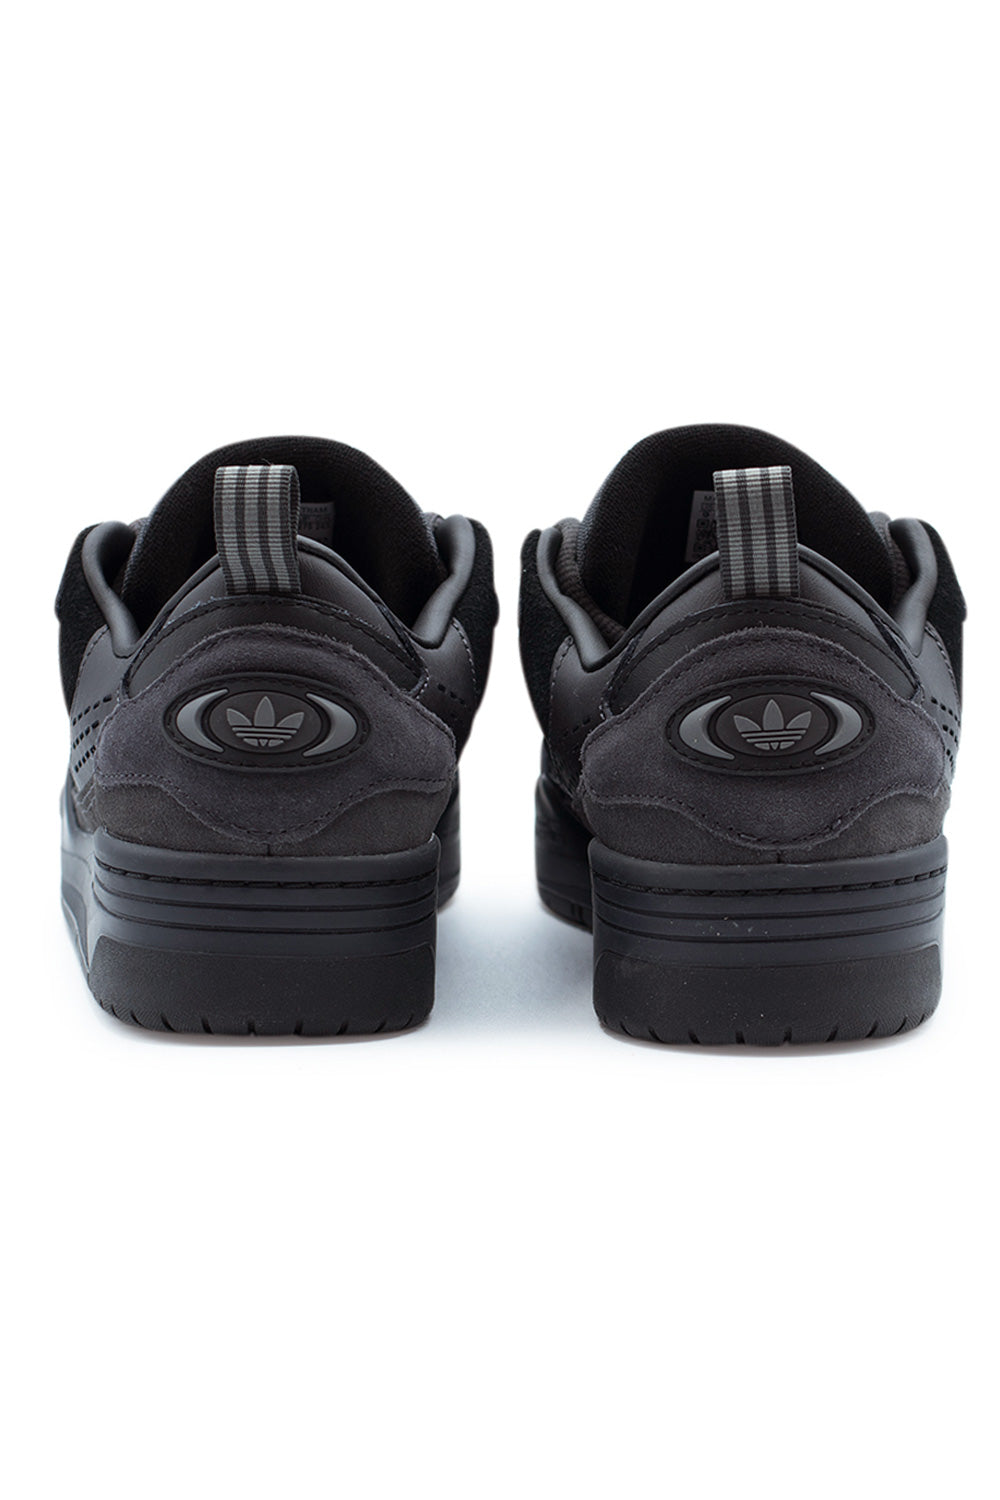 Utility Adi2000 BONKERS / Black / Adidas | Shoe Black Core Utility Black